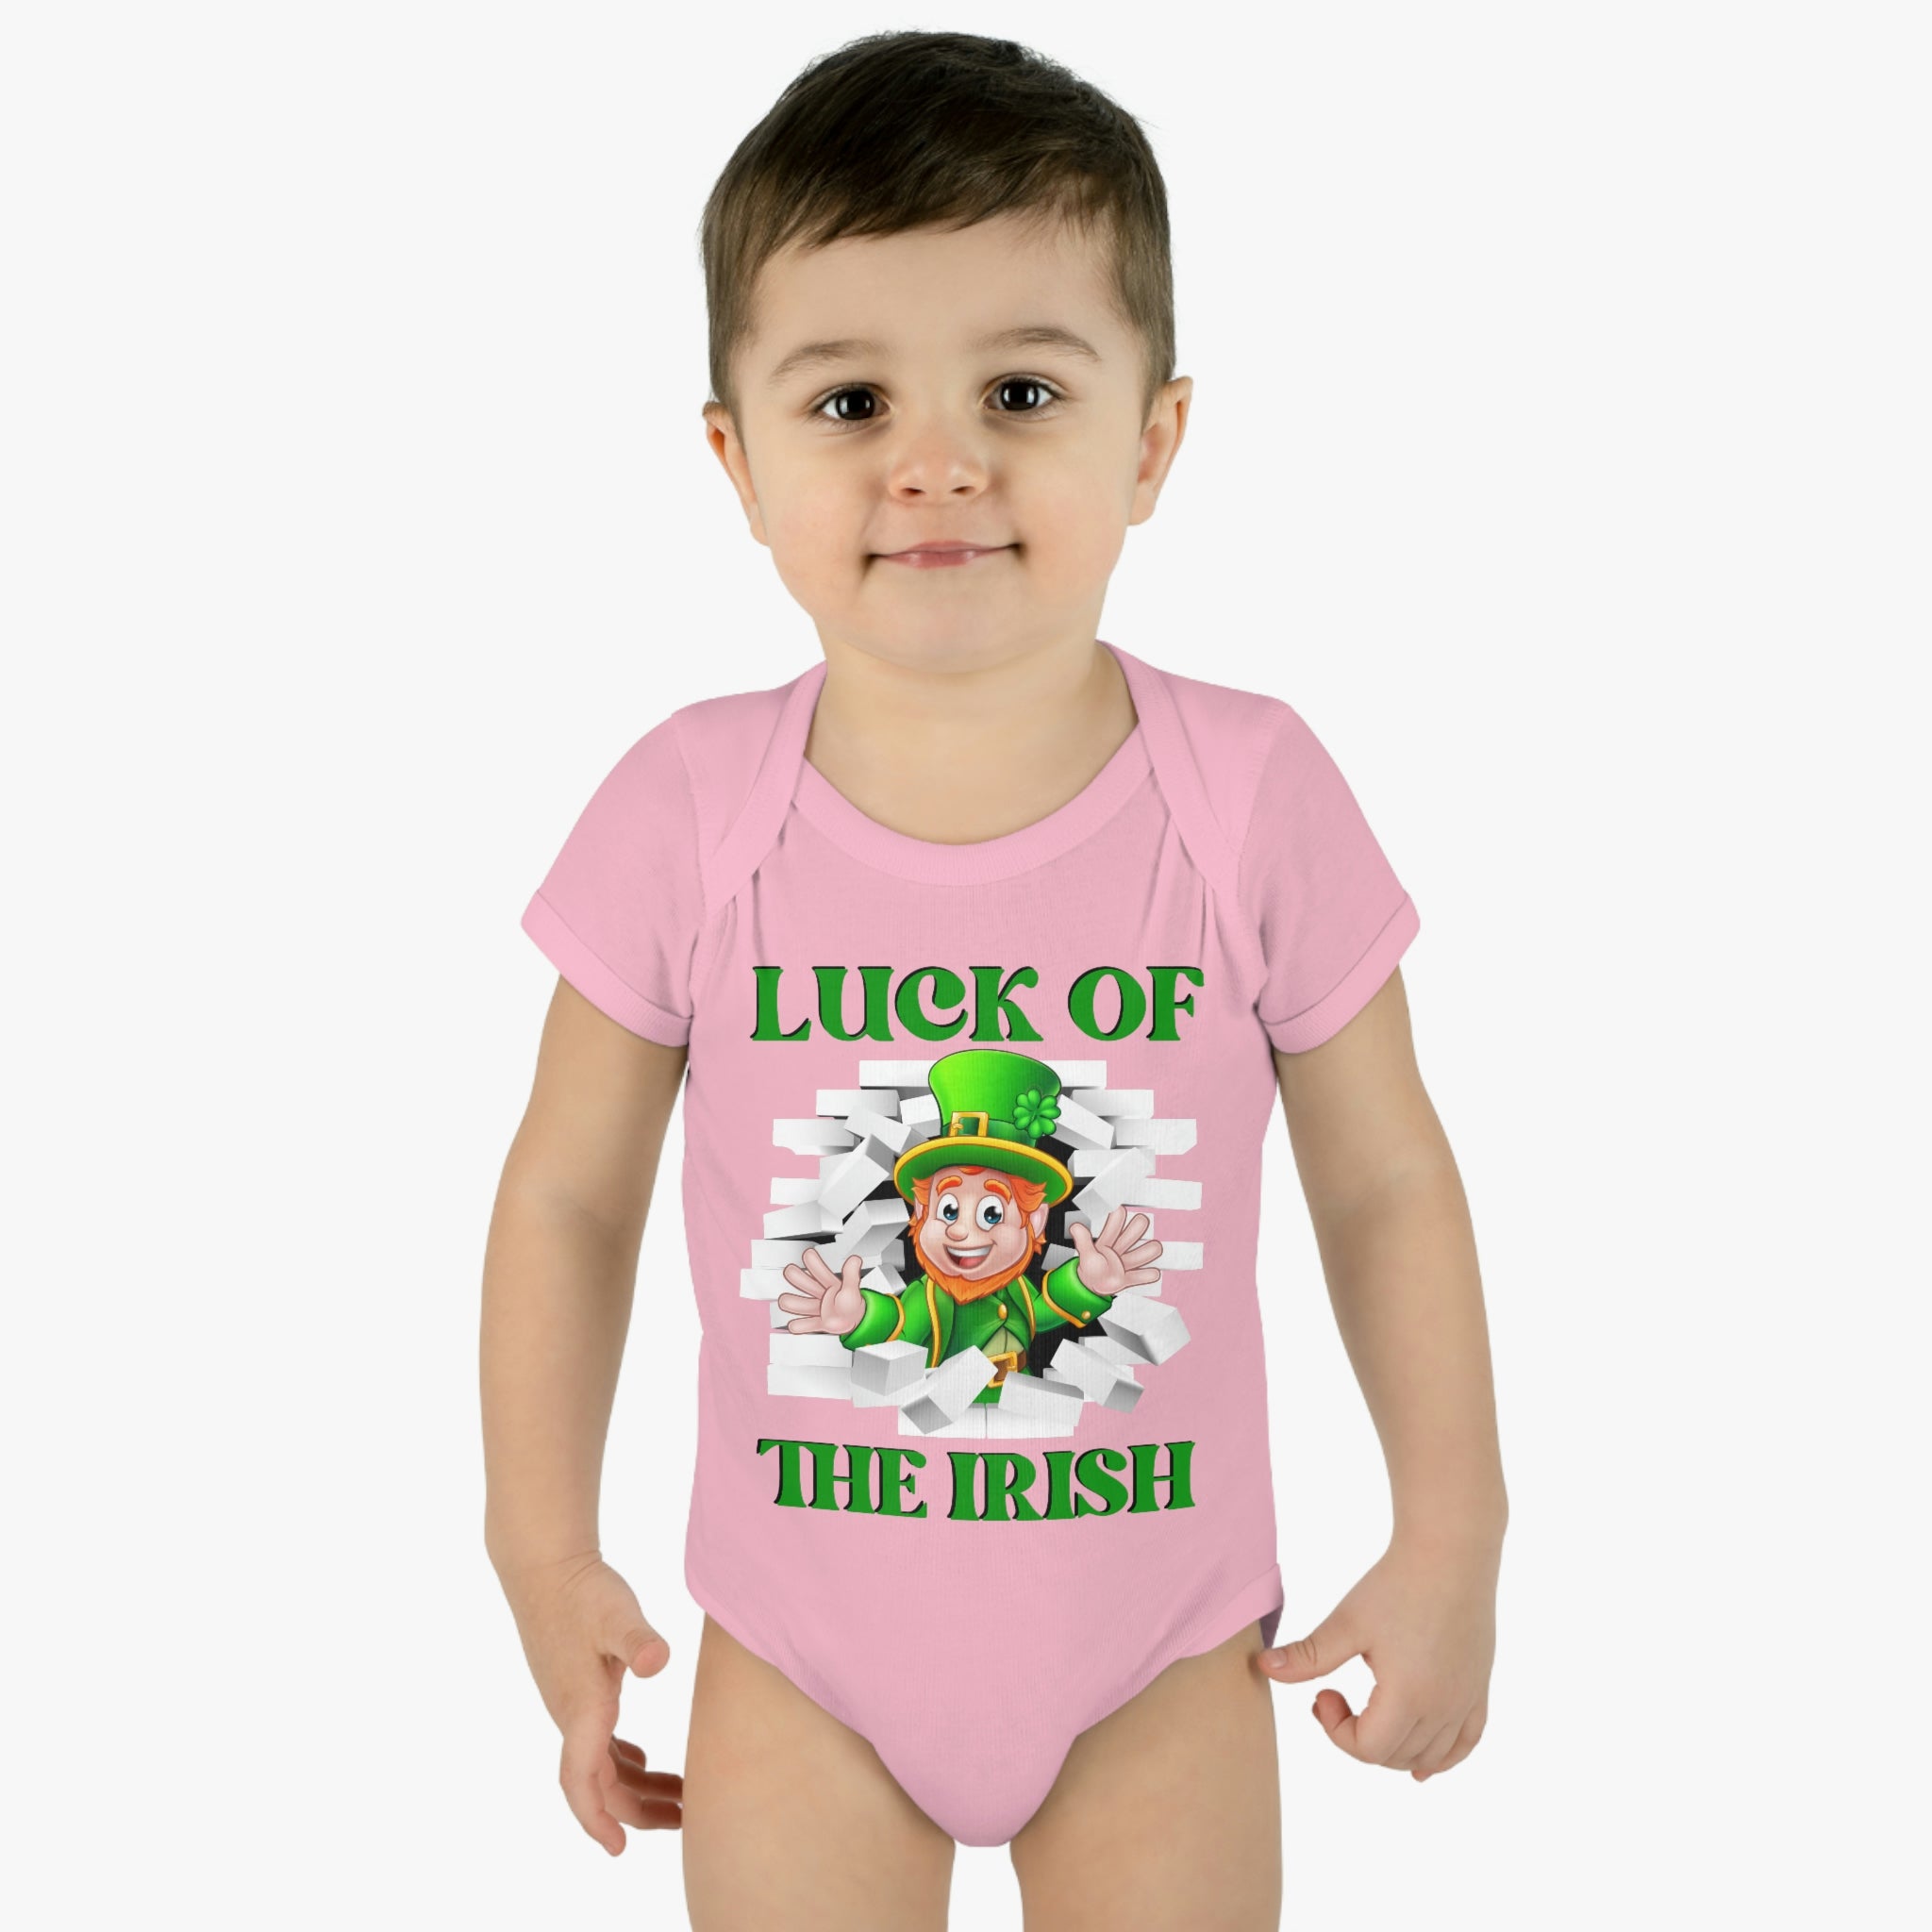 Luck Of The Irish Baby Bodysuit, Luck Of The Irish Infant Bodysuit